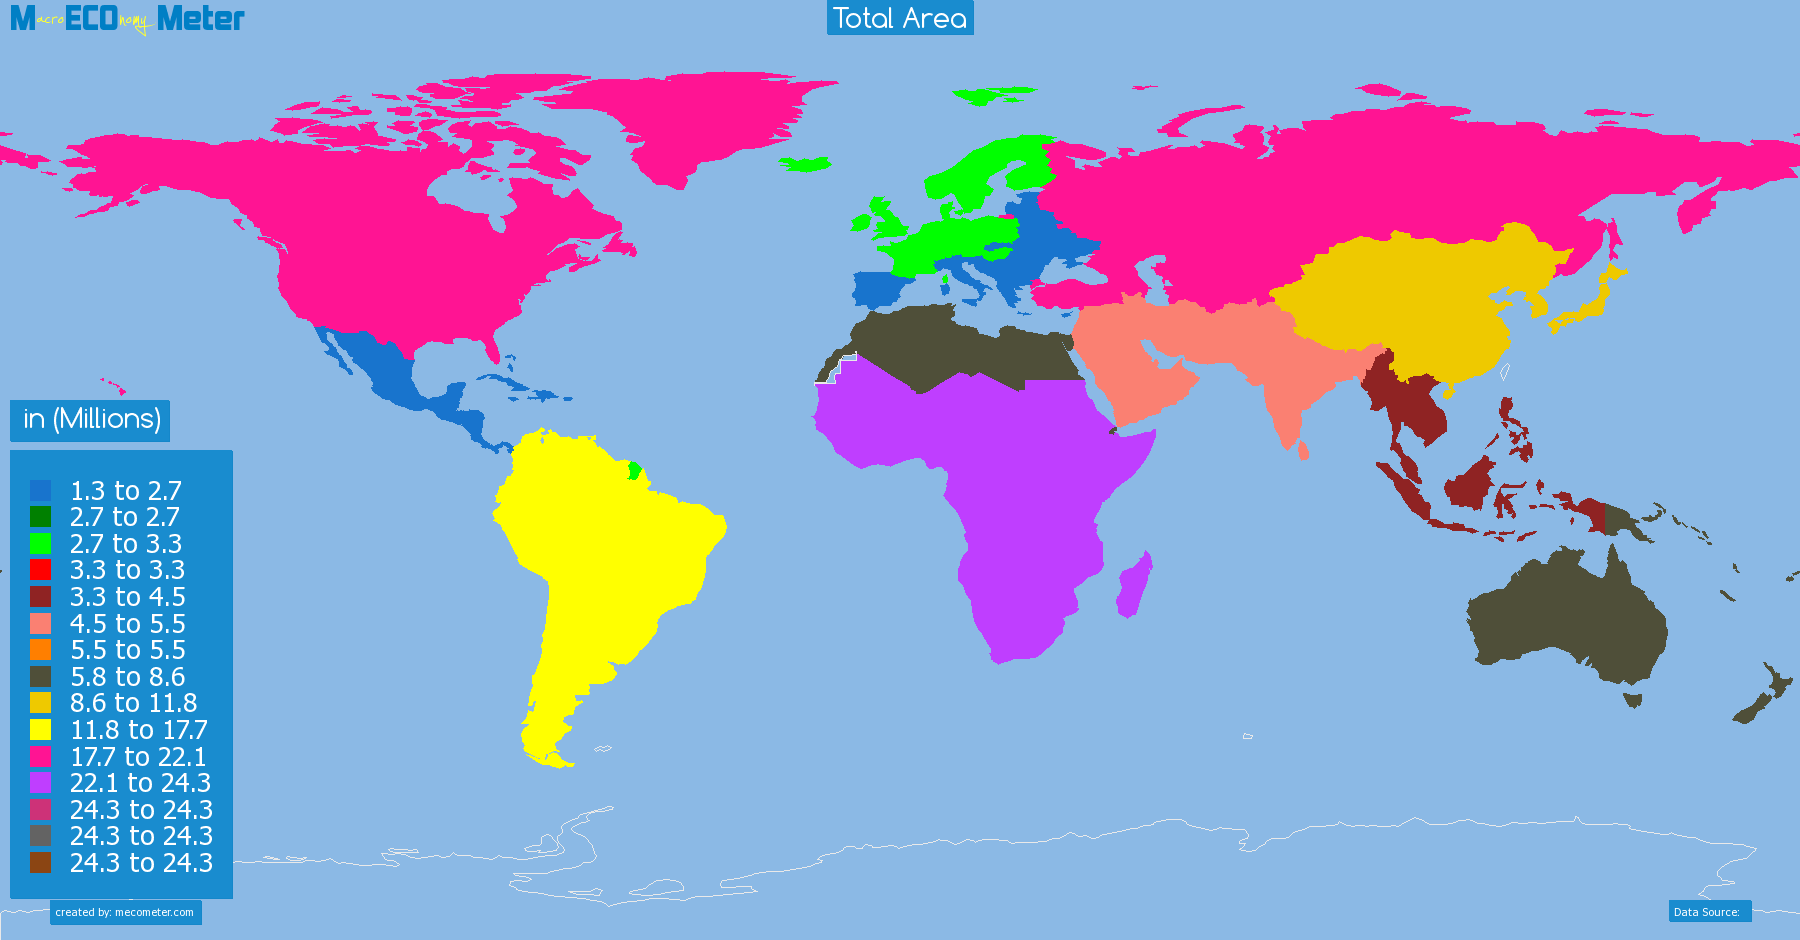 Total Area by region